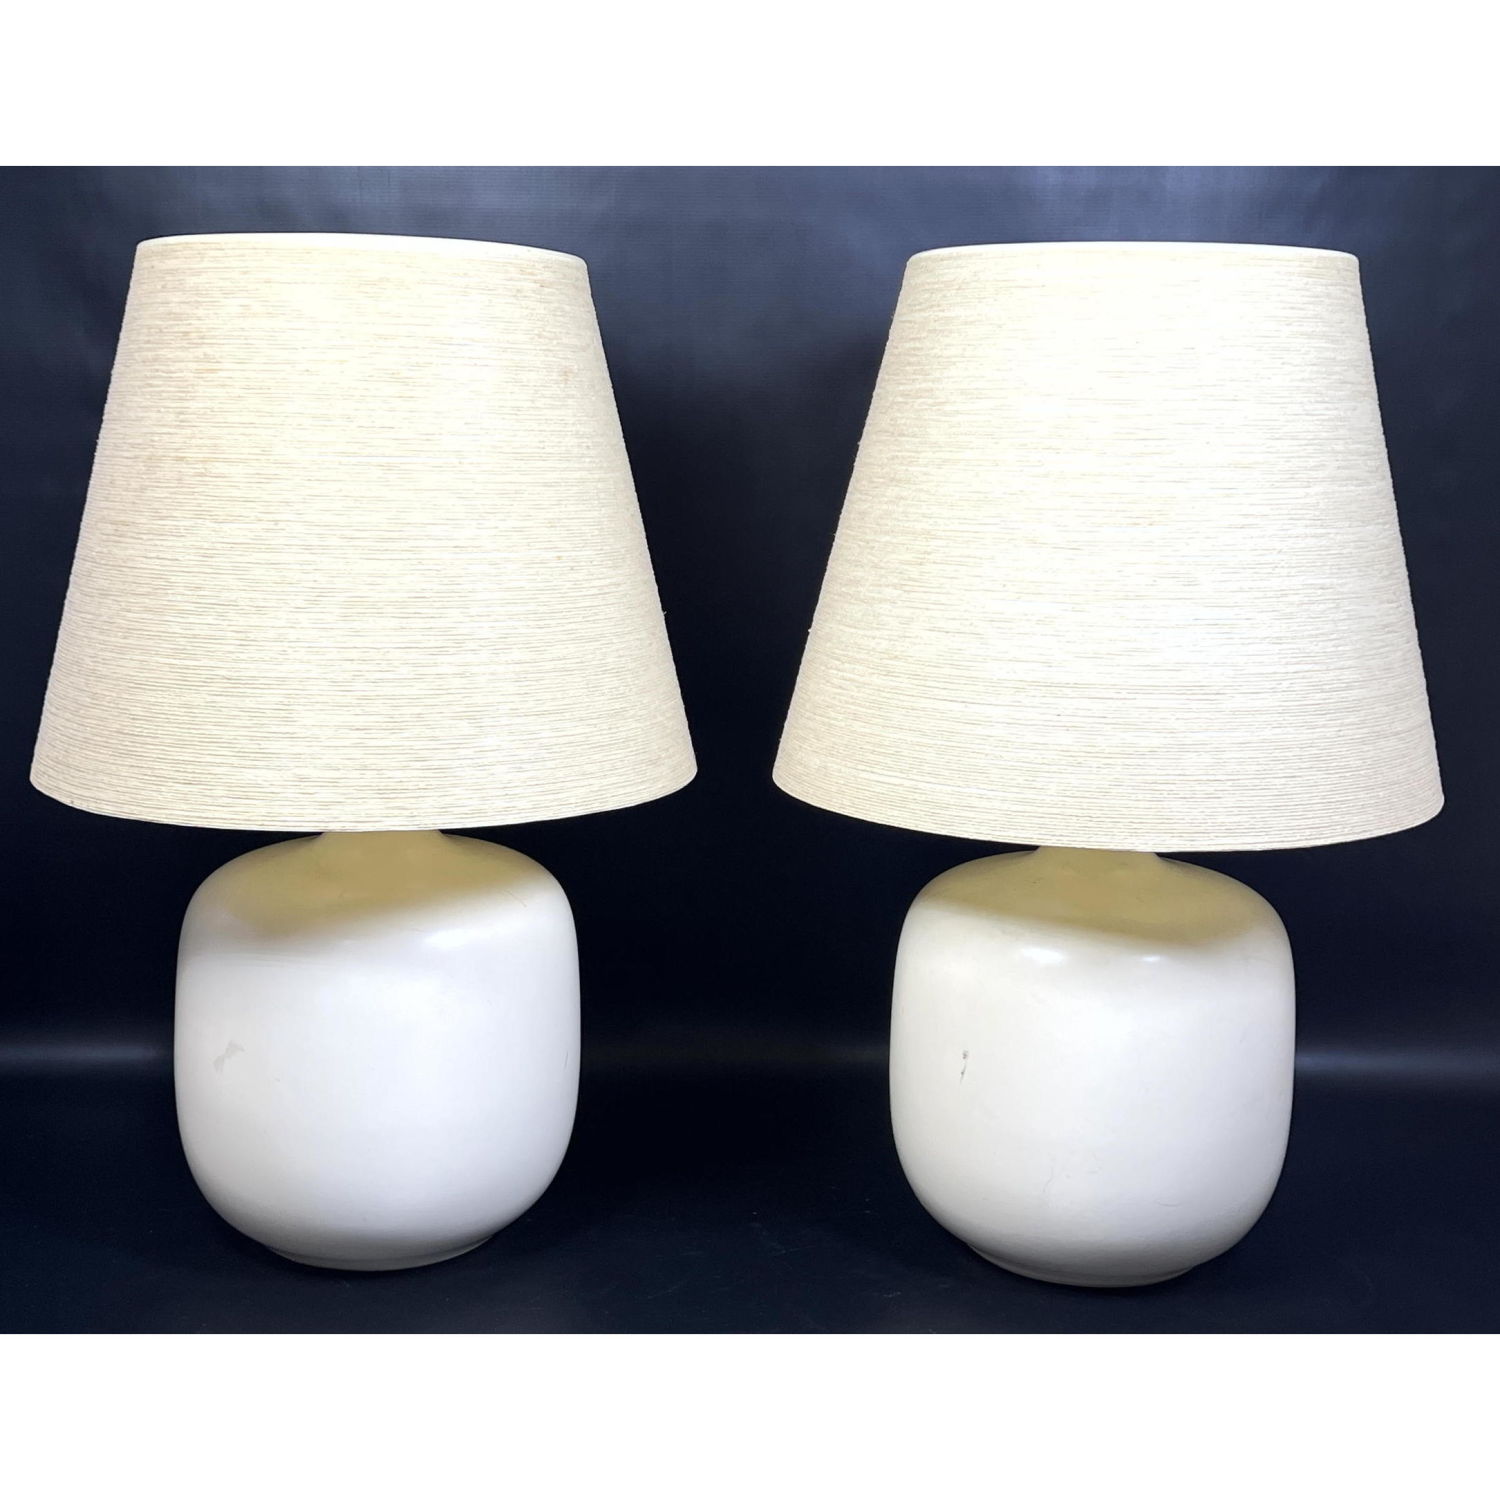 Pr White BOSTLUND Lamps with Cord 2ba69b